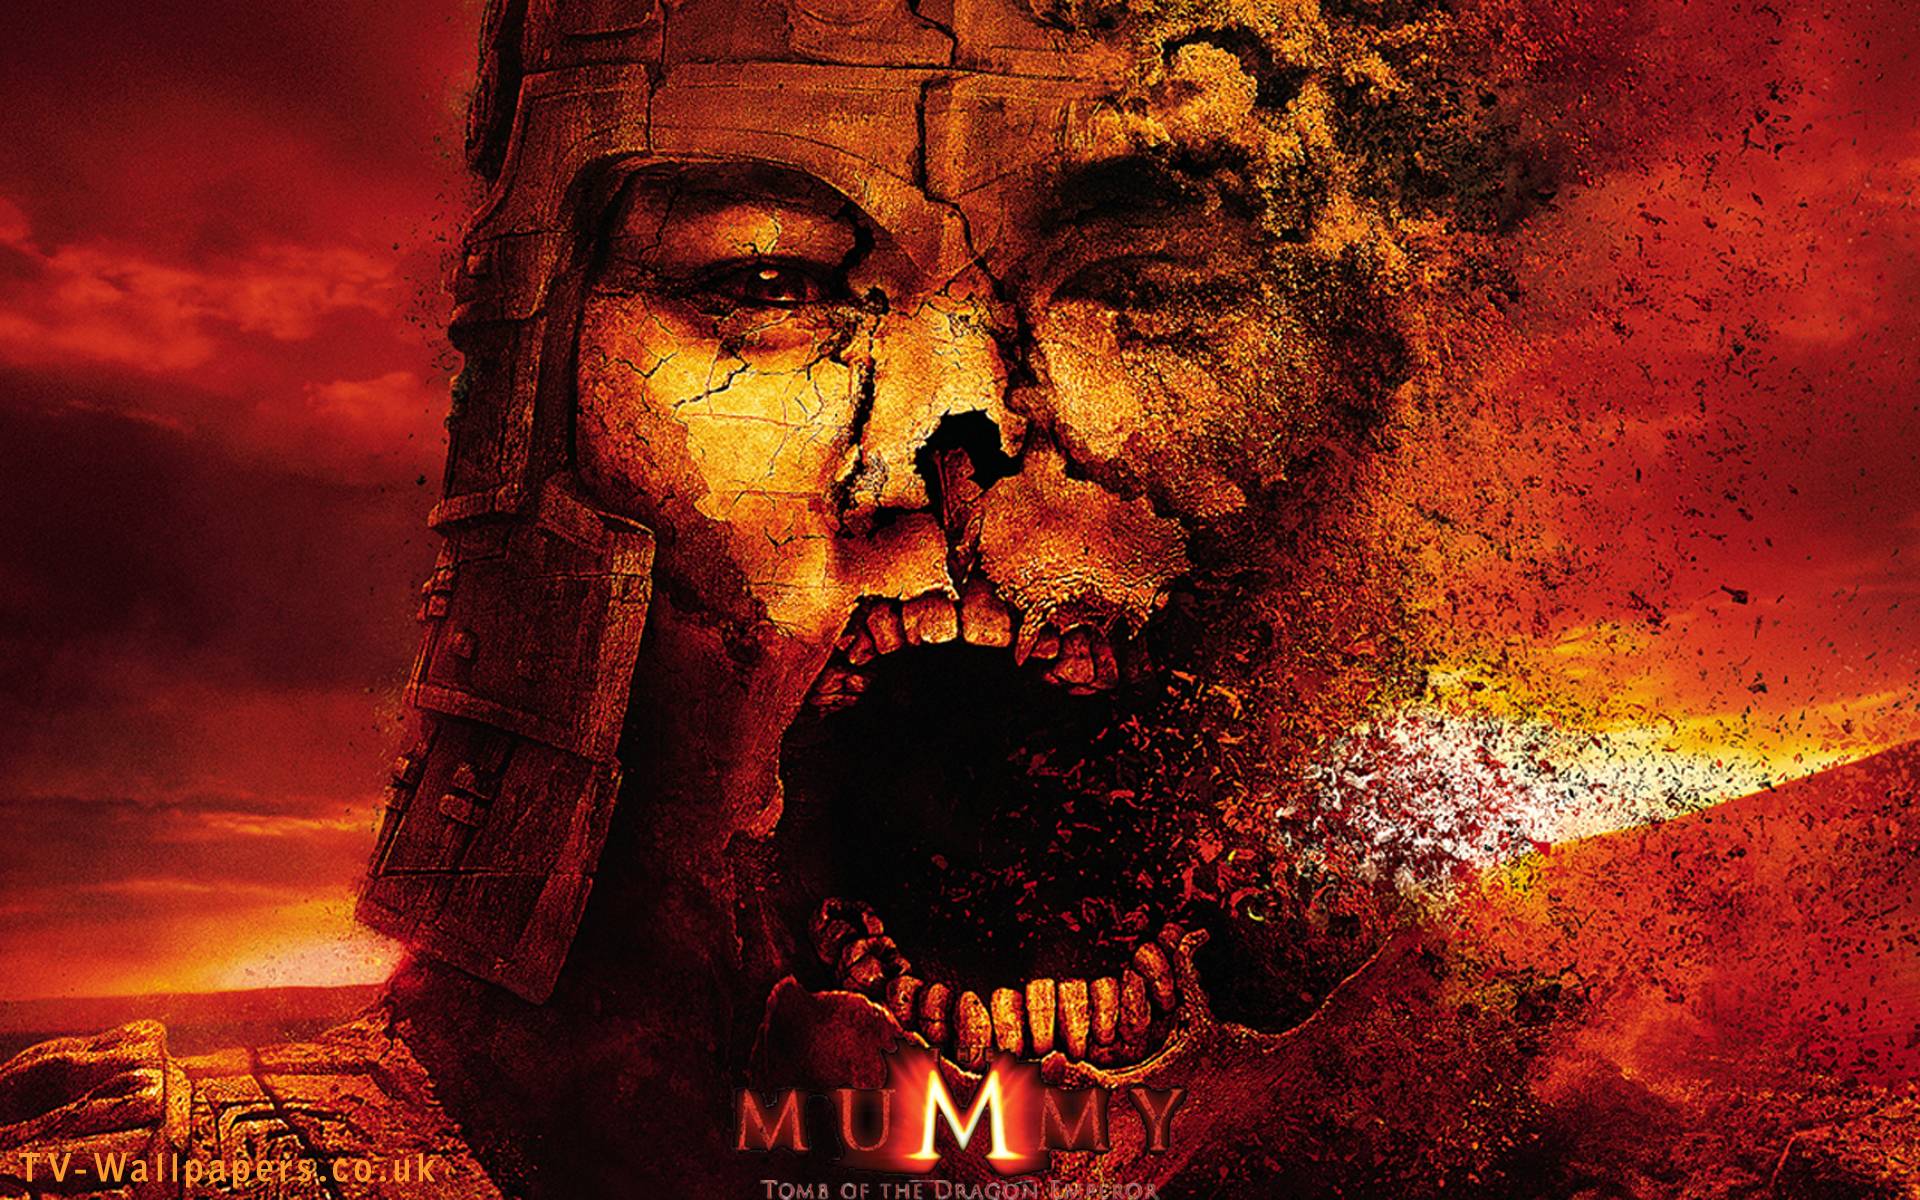 The Mummy 3 Wallpaper 1920x1200 592067